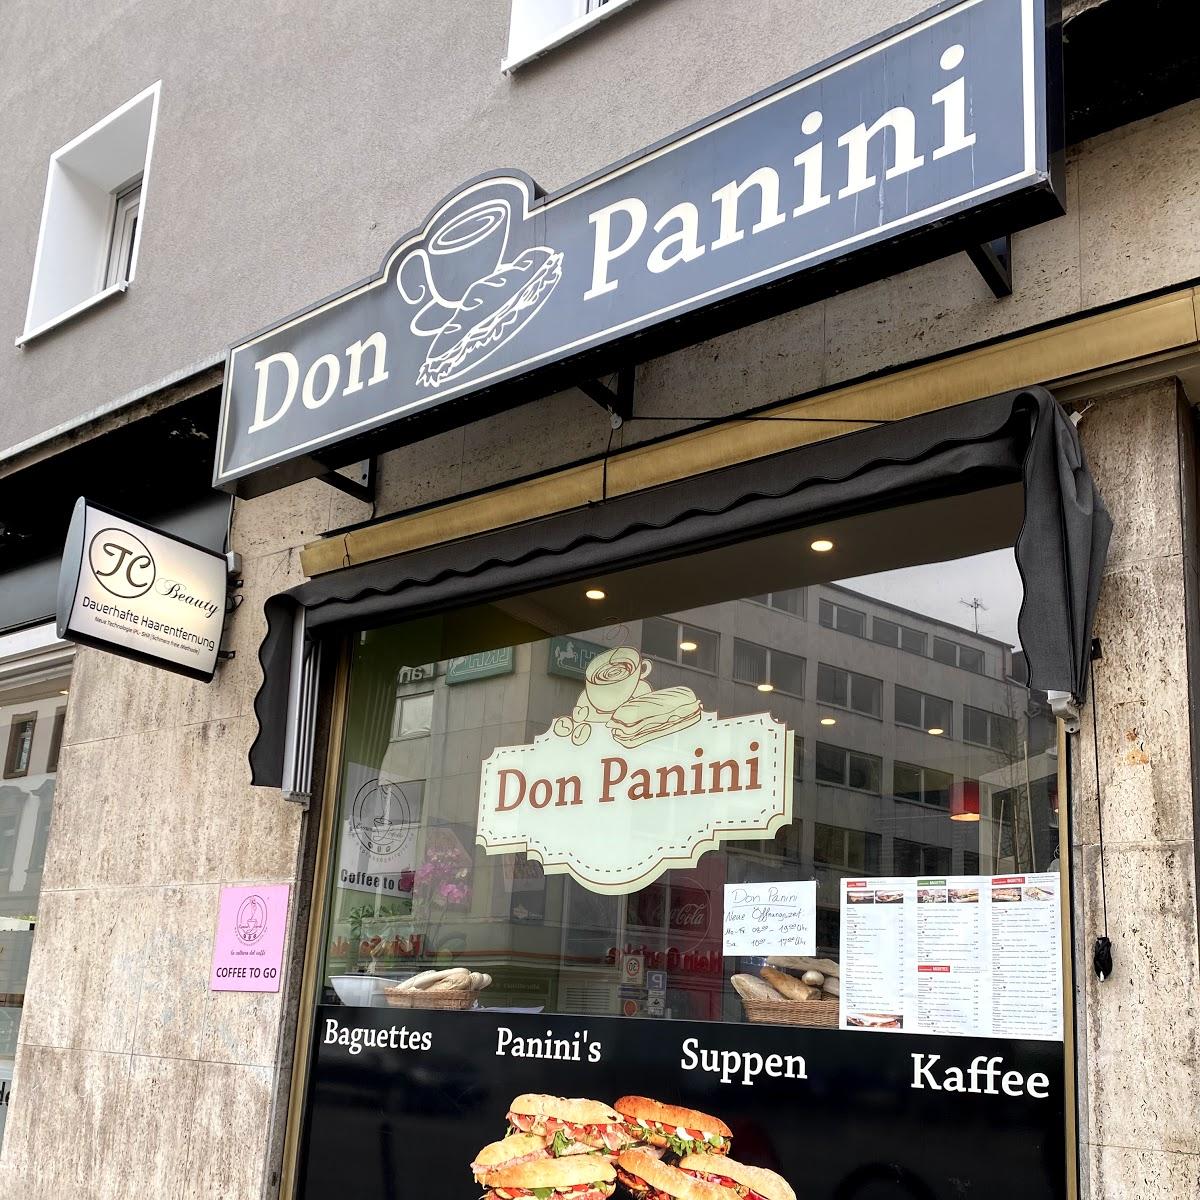 Restaurant "Don Panini" in Düsseldorf